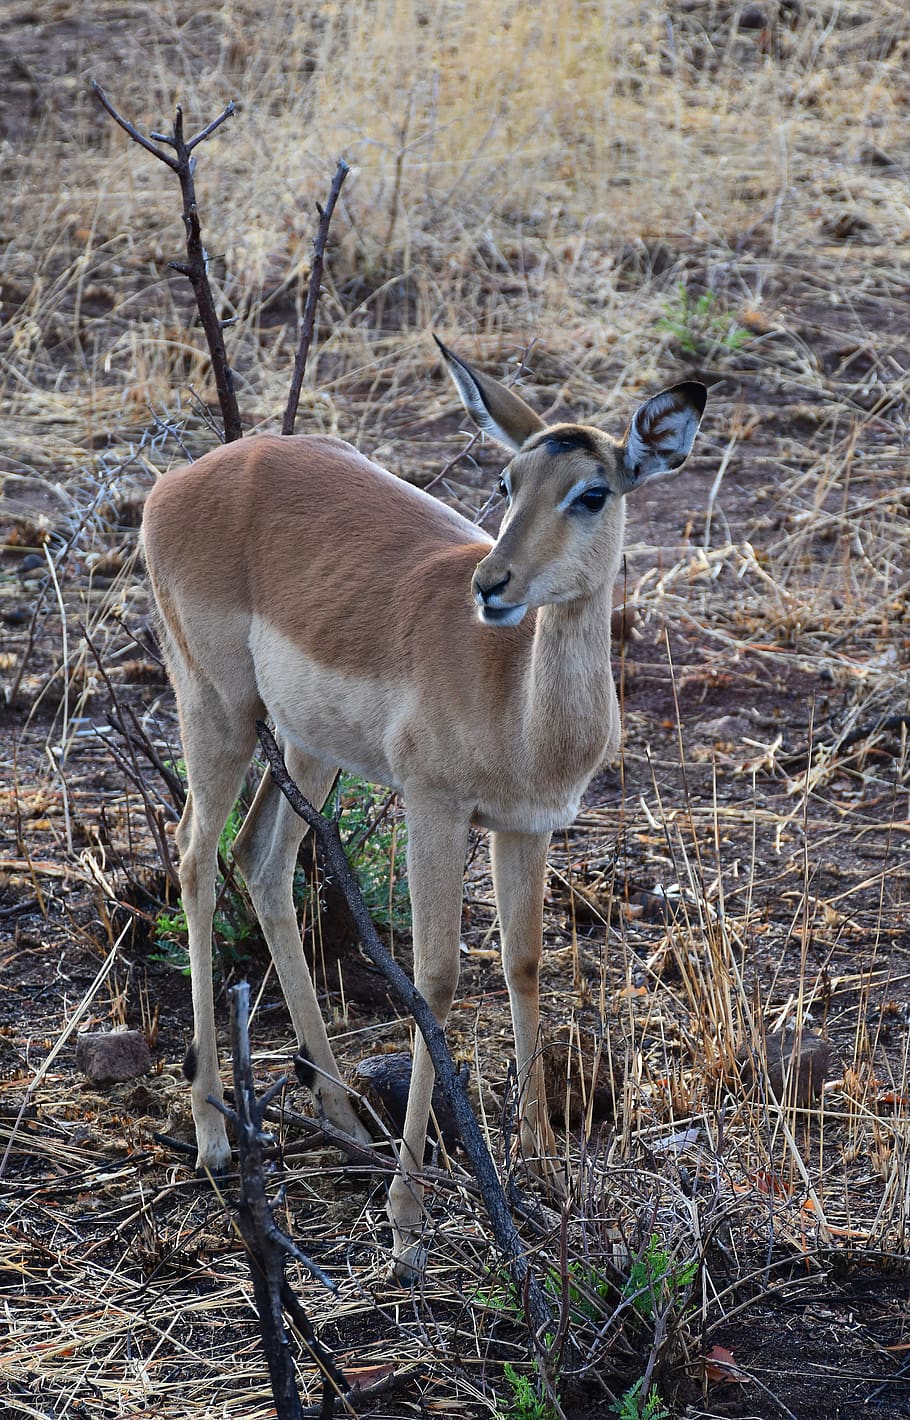 impala, animals, nature, safari, africa, gazelle, wild, desert, savannah, antelope